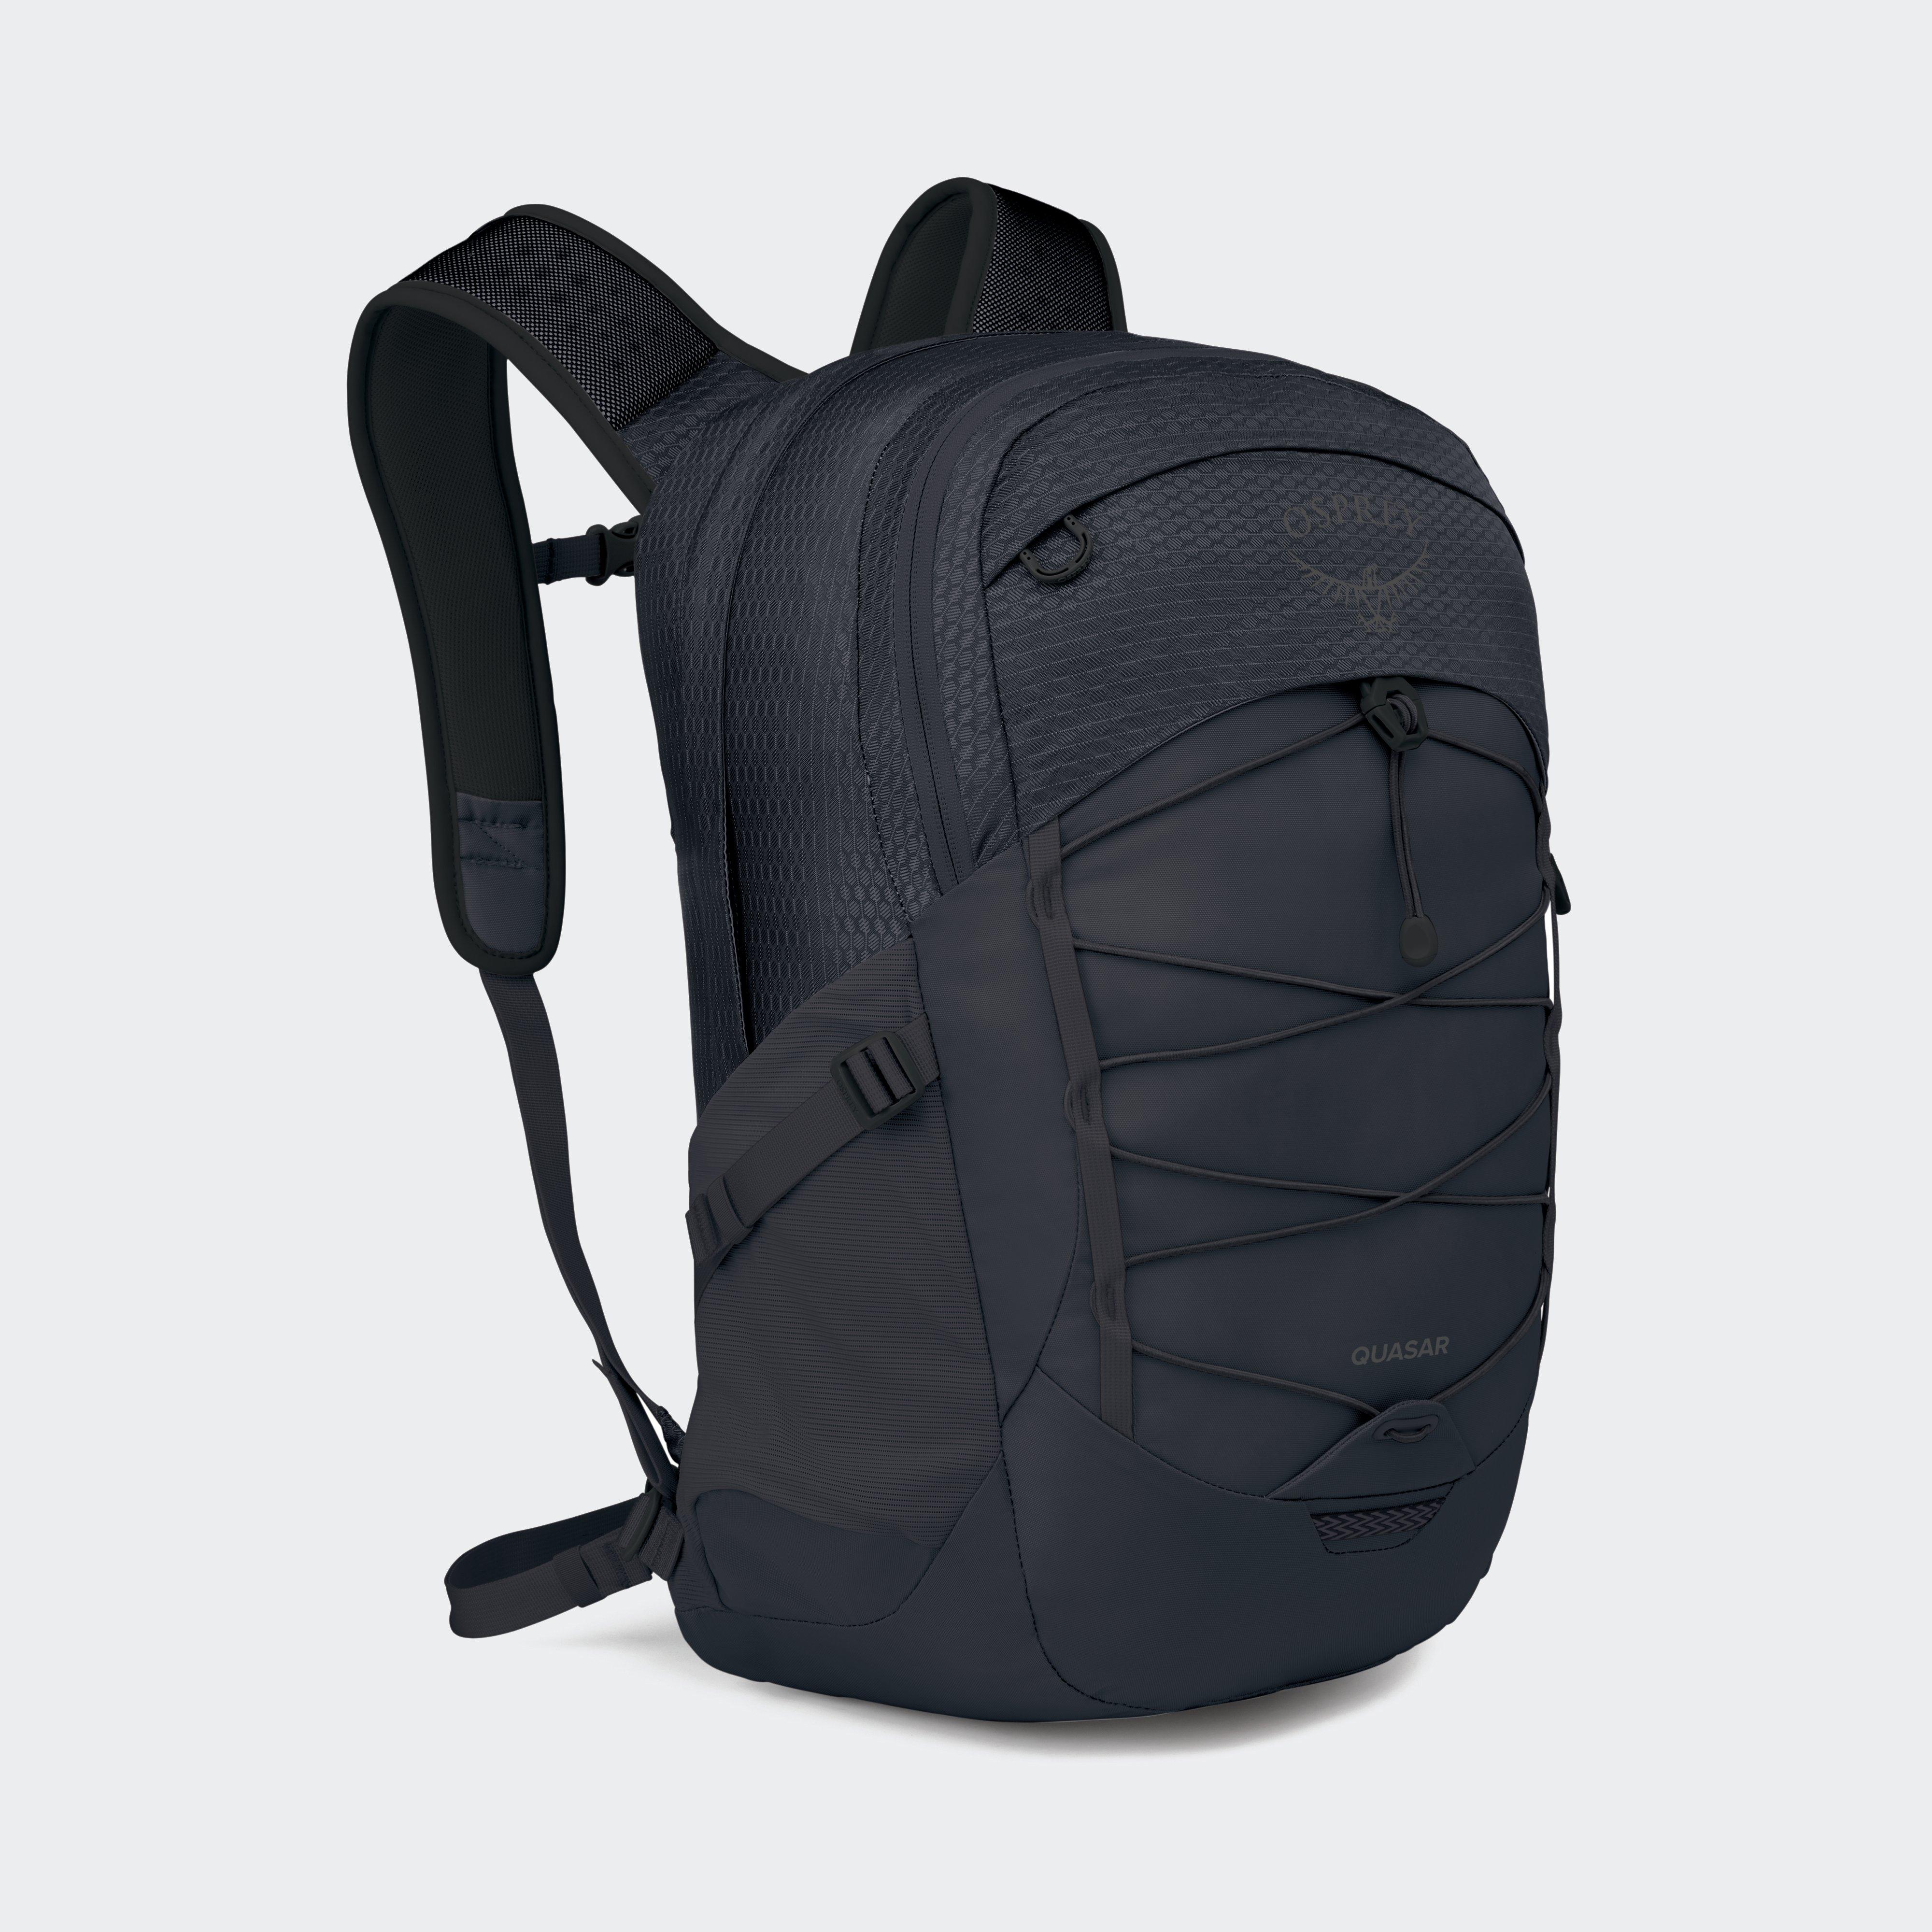 Osprey Osprey Quasar Backpack - Black, Black